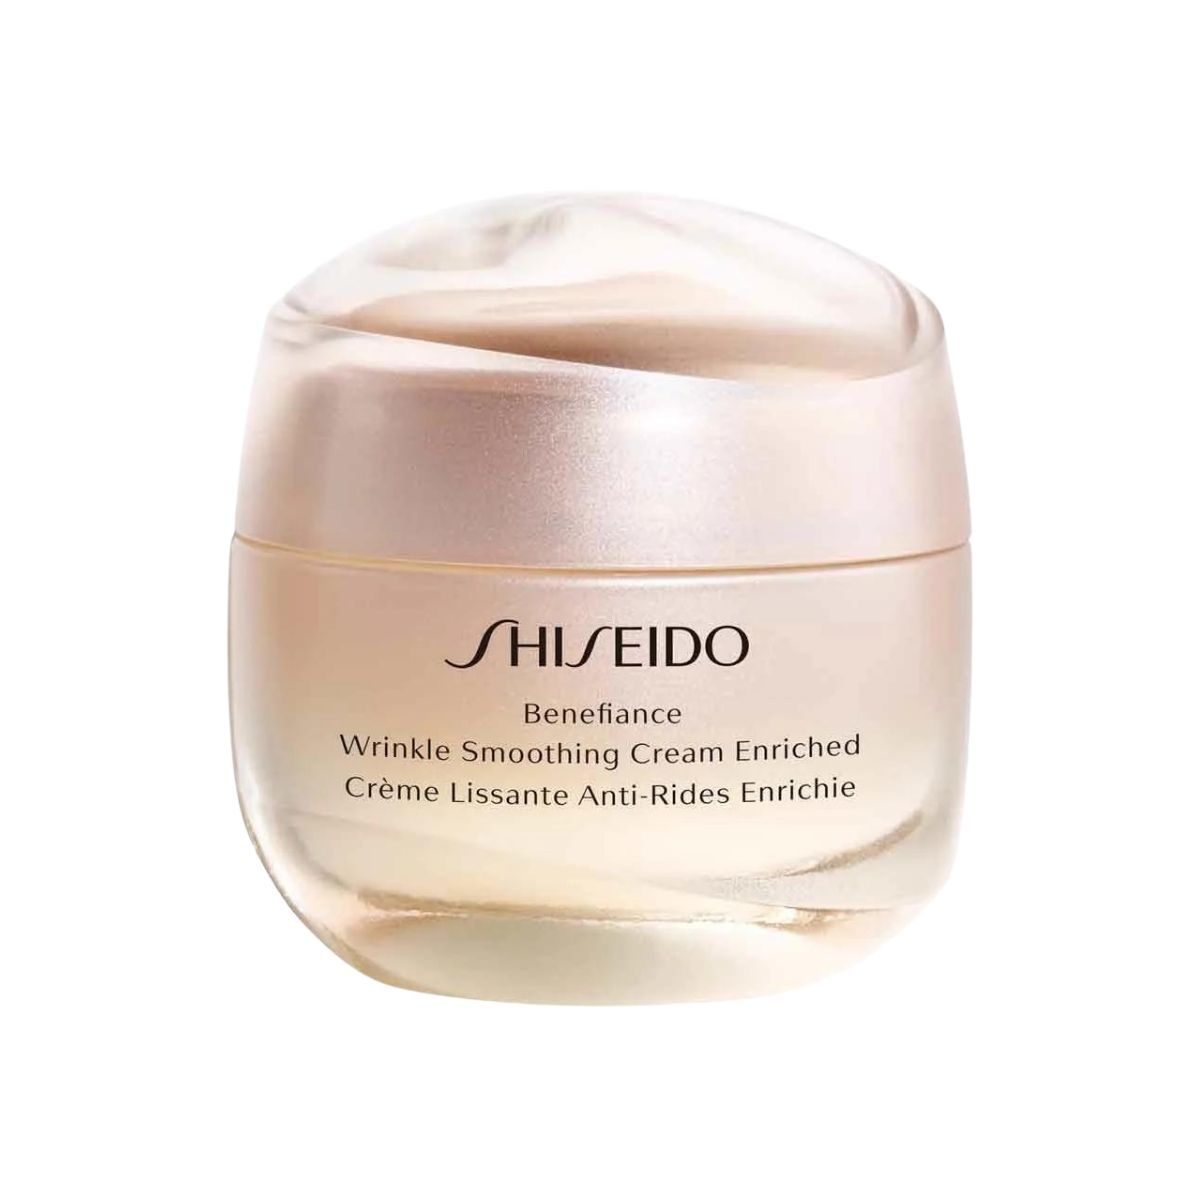 Shiseido Wrinkle Smoothing Cream 50ml 